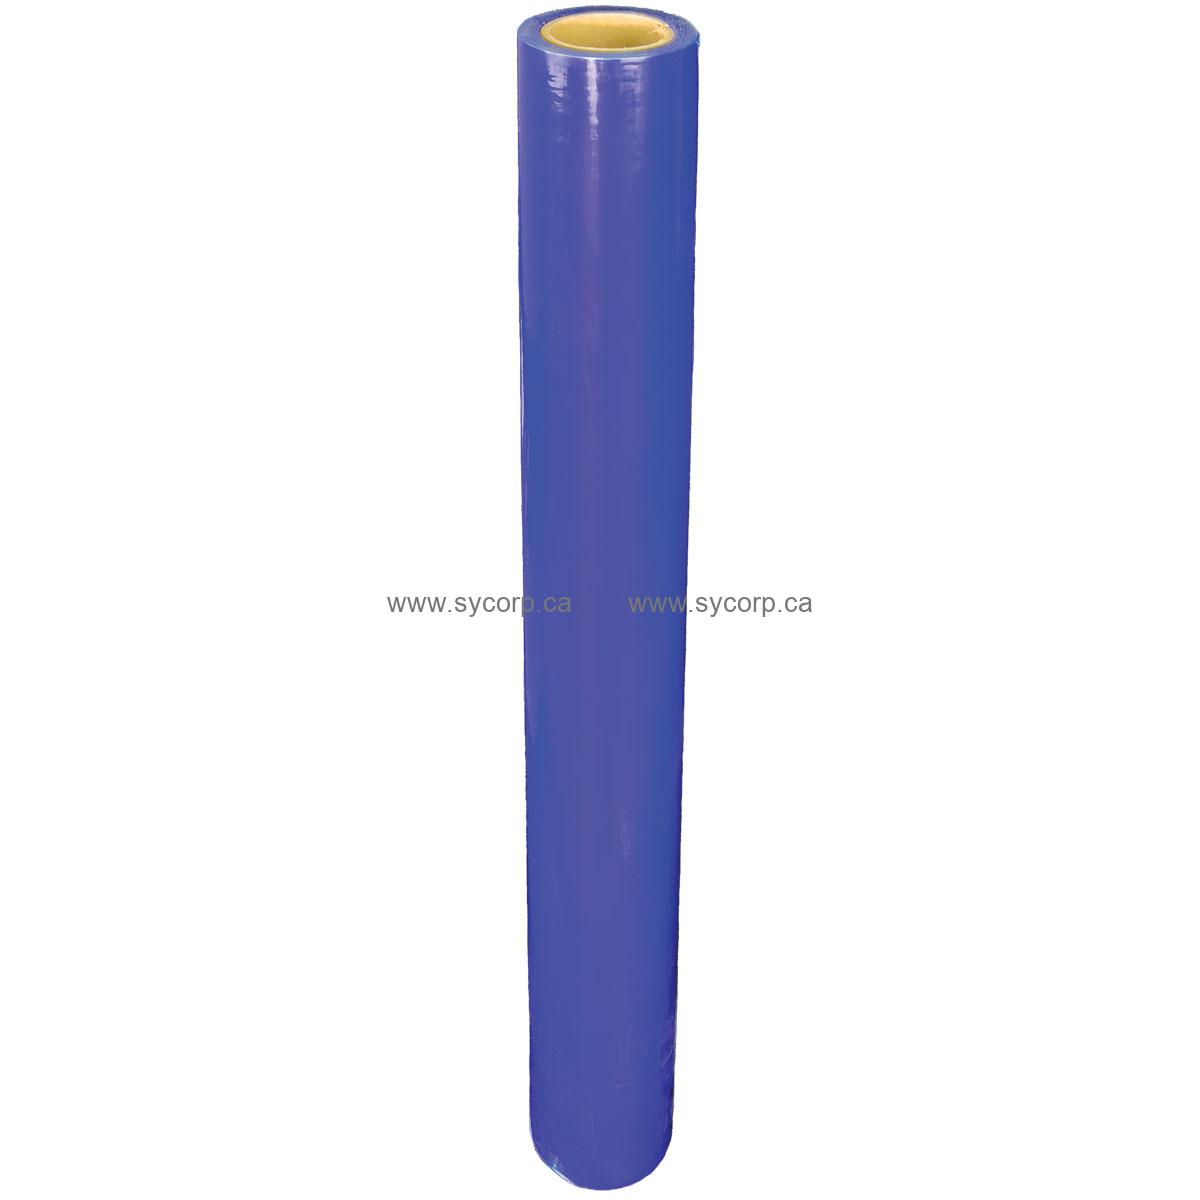 Film autocollant bleu protection ventilation - ThermoLab sàrl